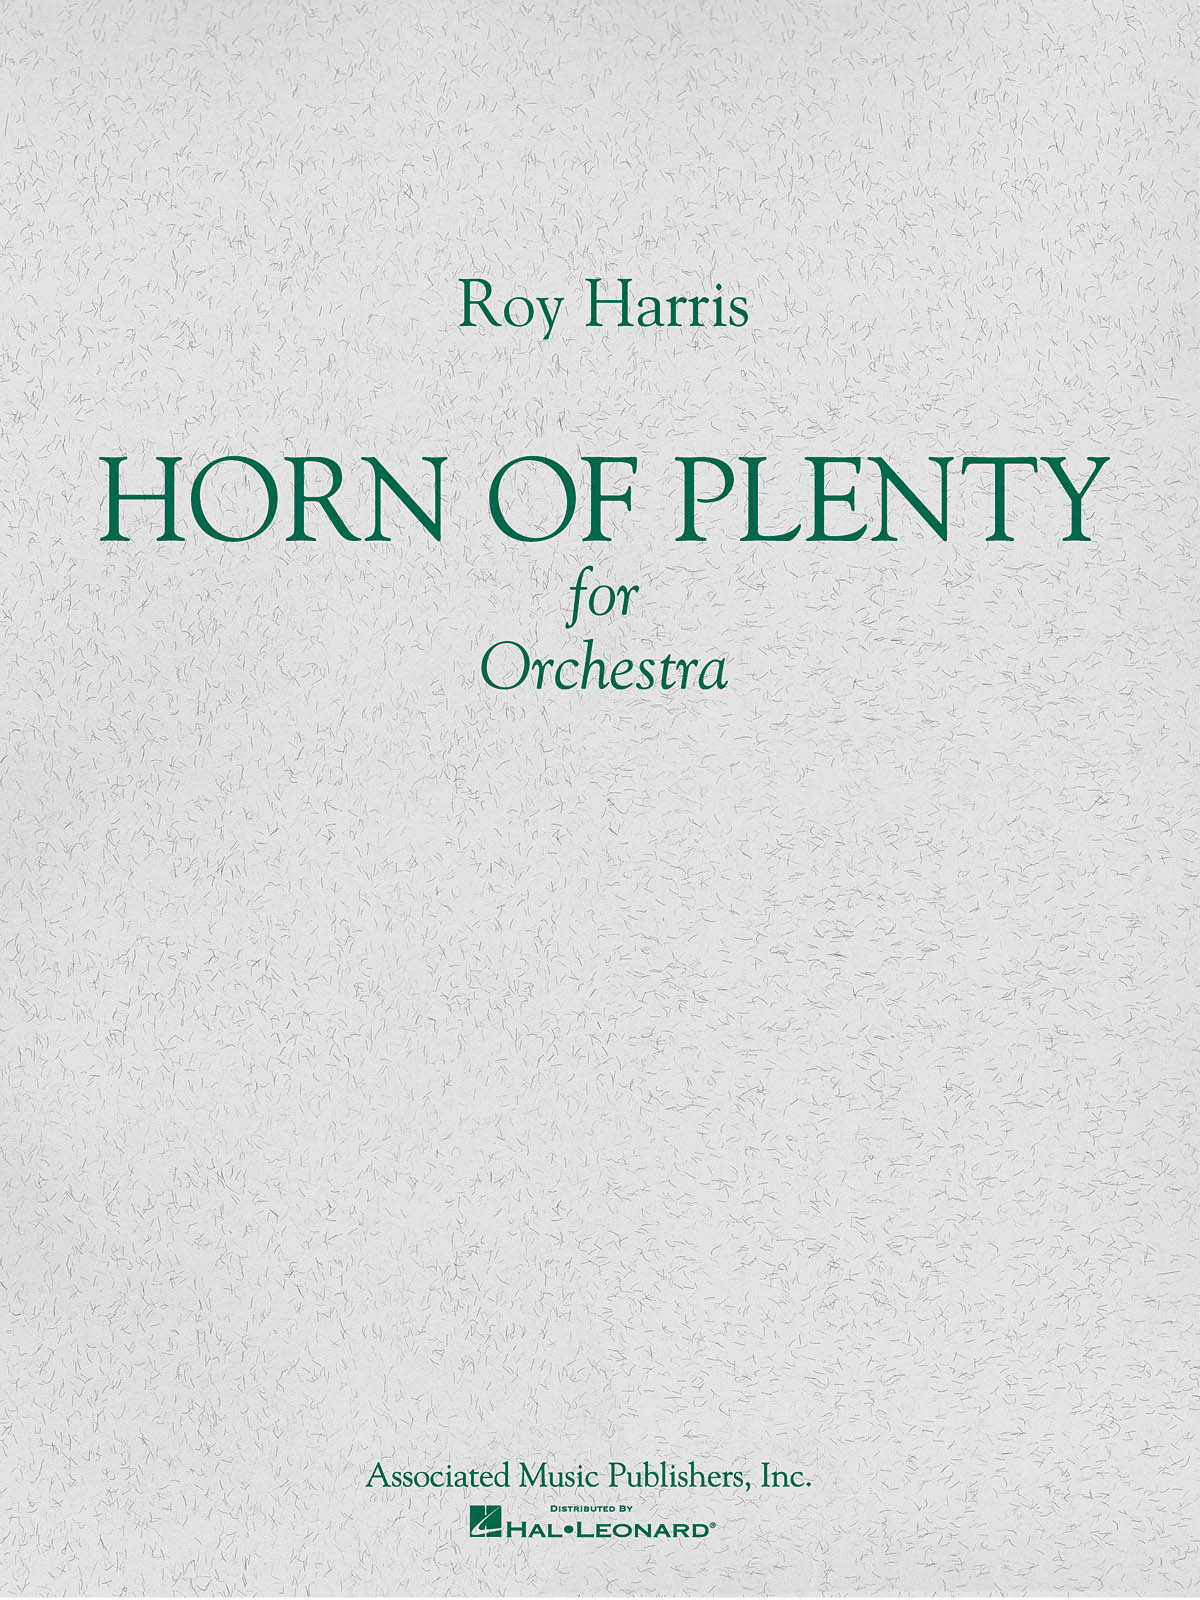 Roy Harris: Horn of Plenty